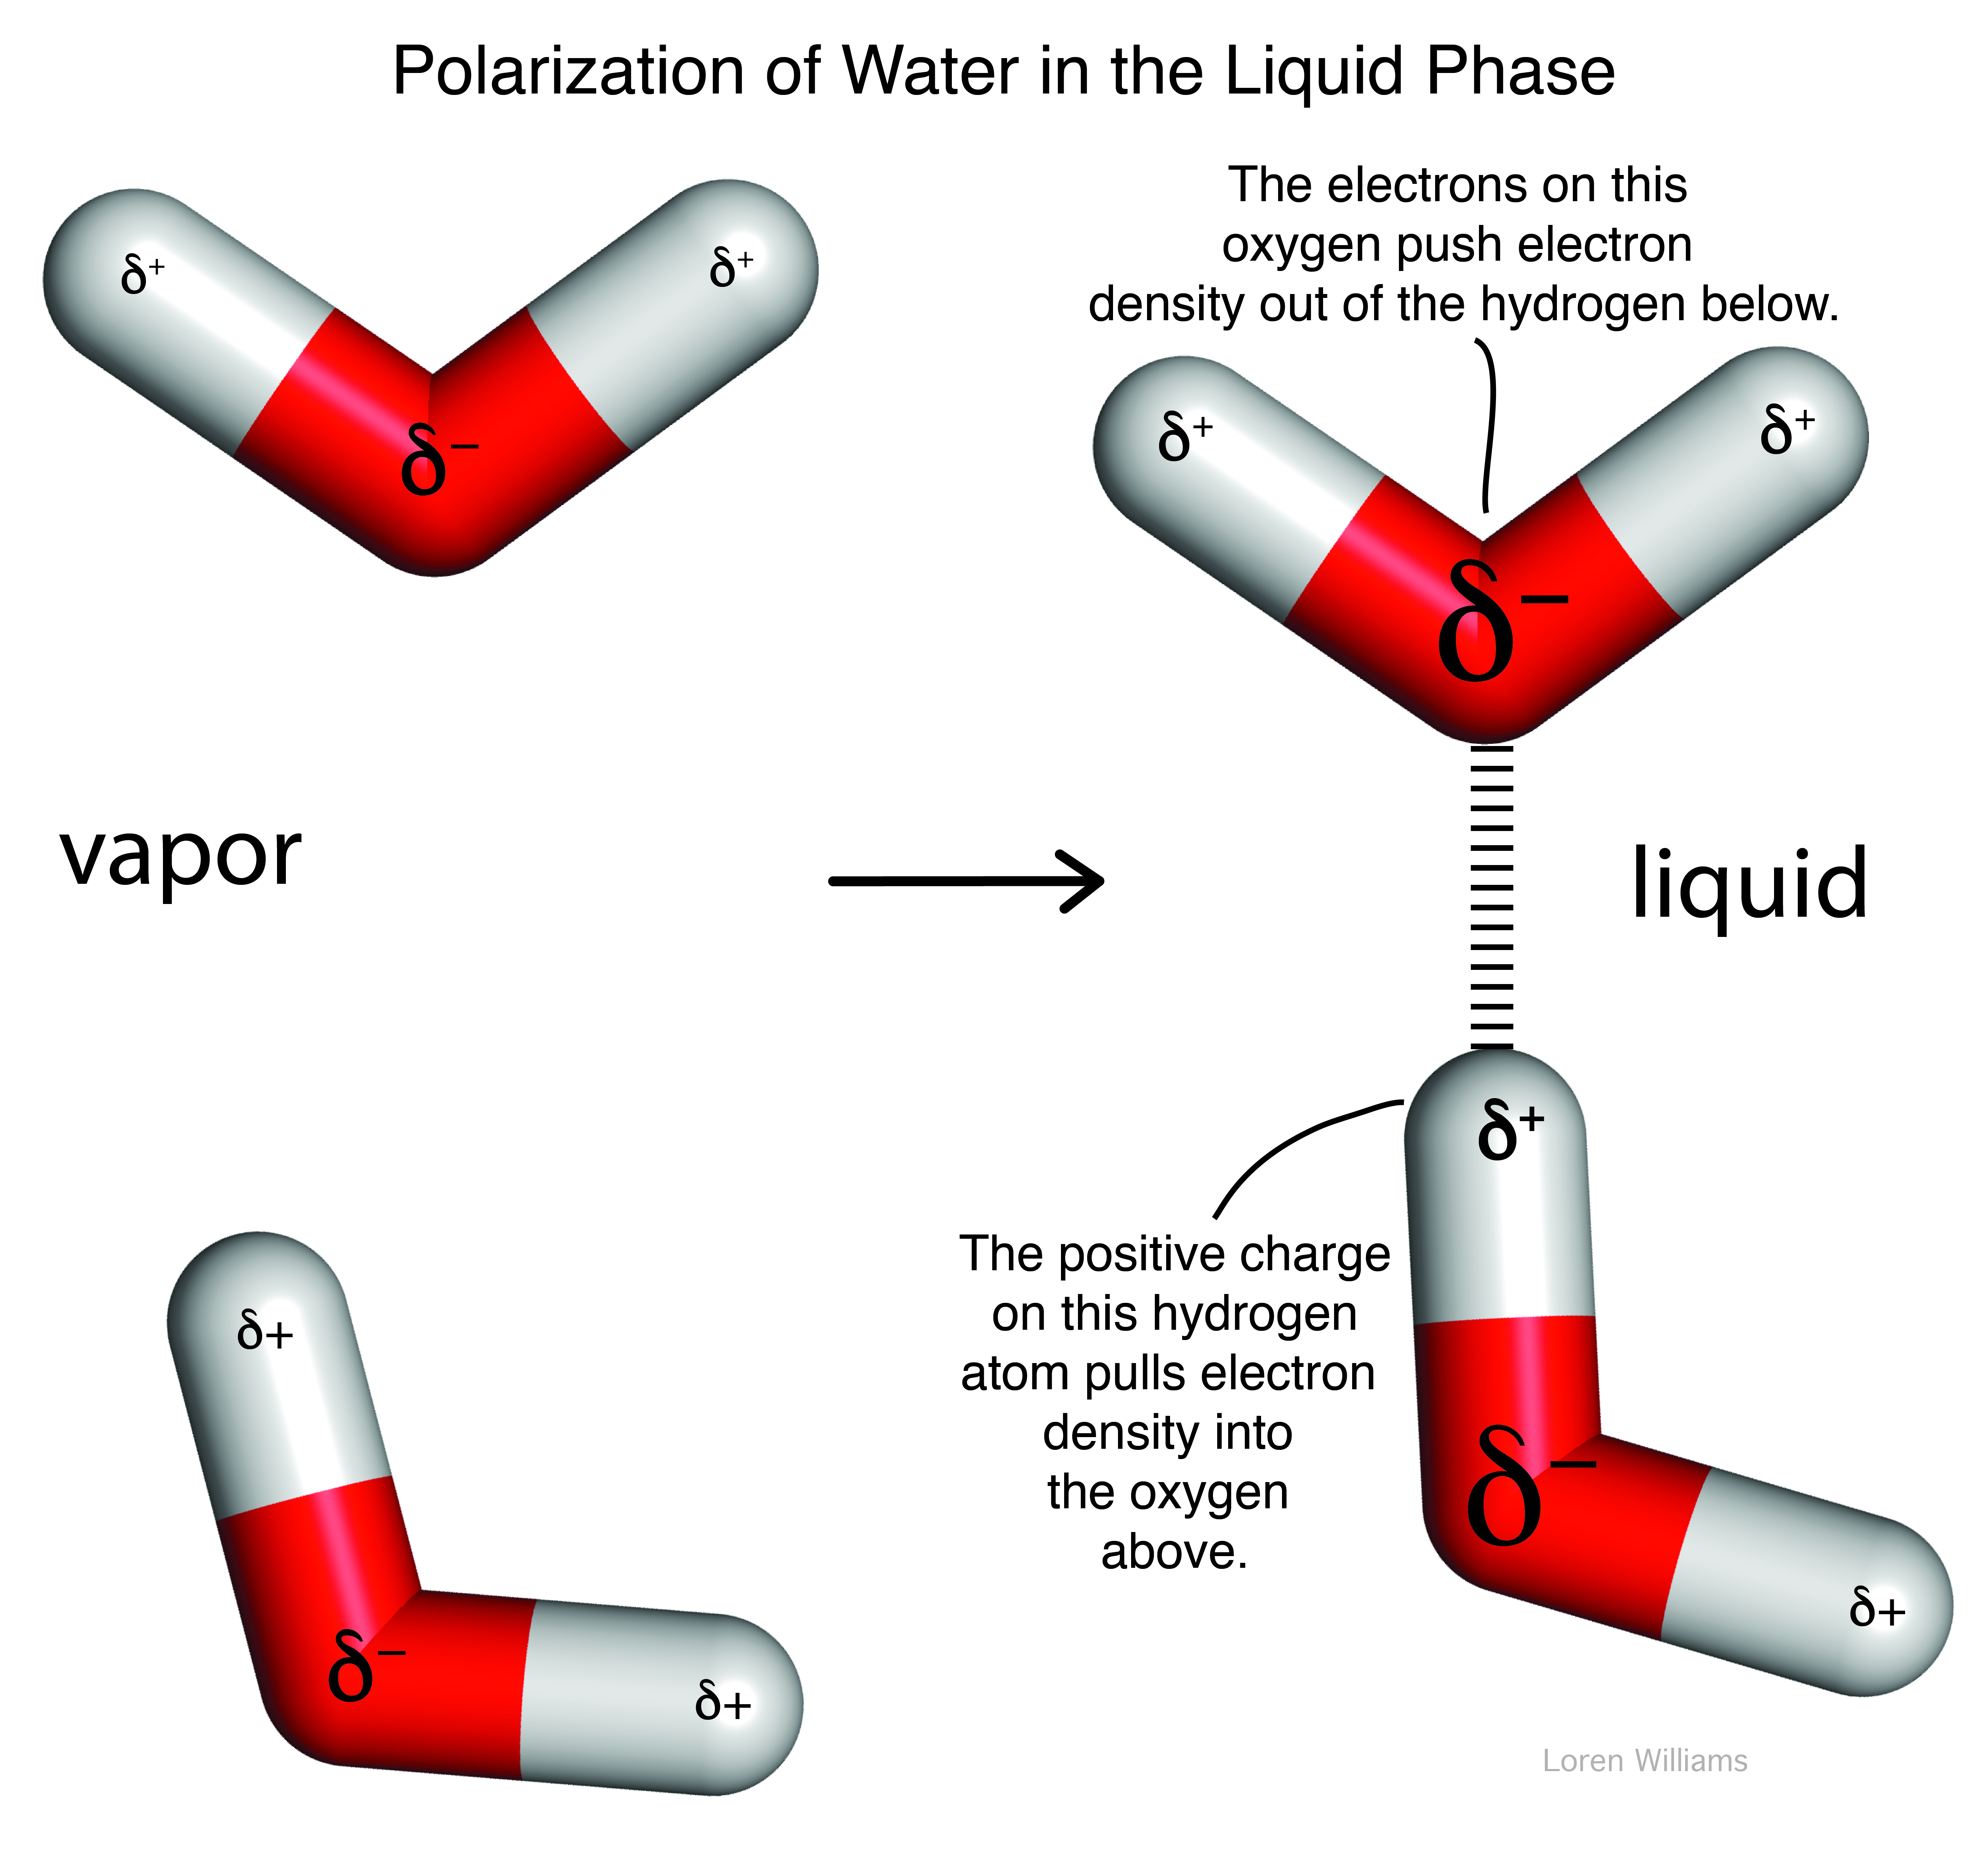 water polarization